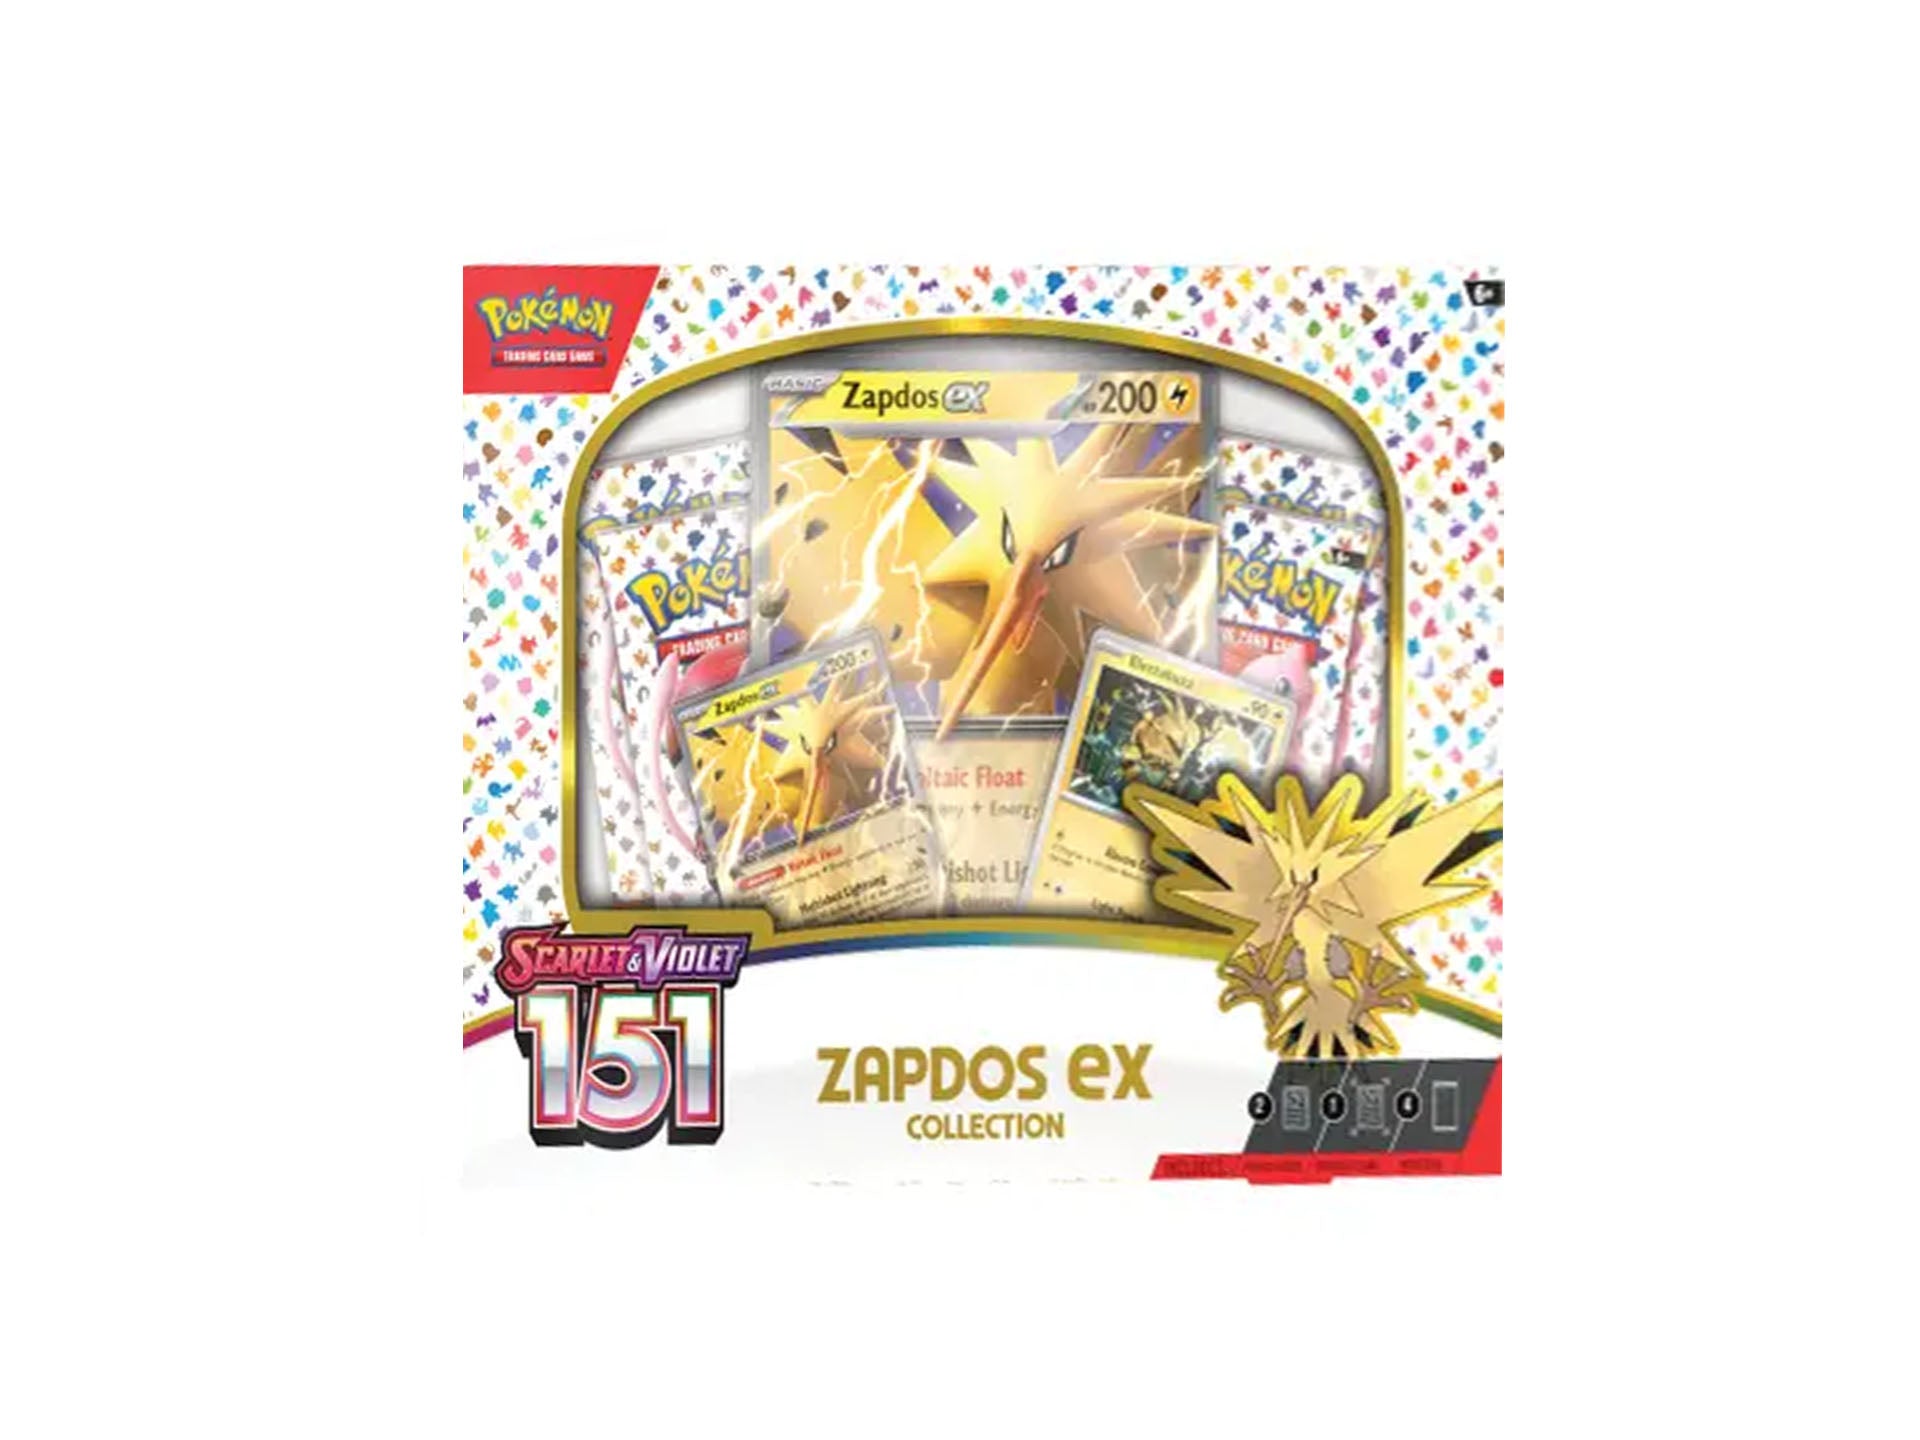 Pokémon Scarlet & Violet 151 Zapdos EX